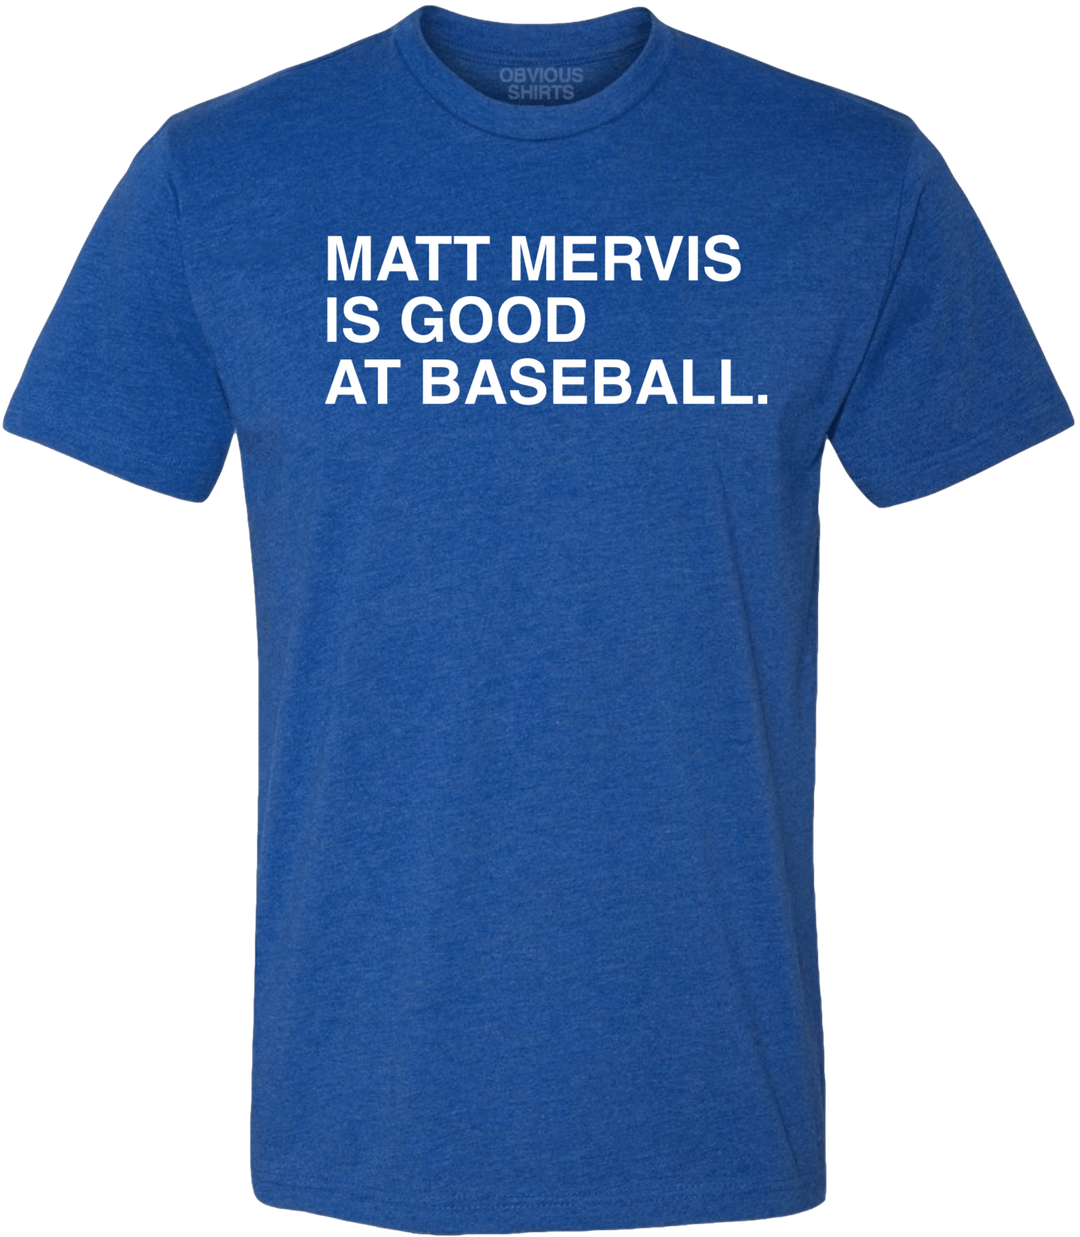 MATT MERVIS IS GOOD AT BASEBALL. - OBVIOUS SHIRTS